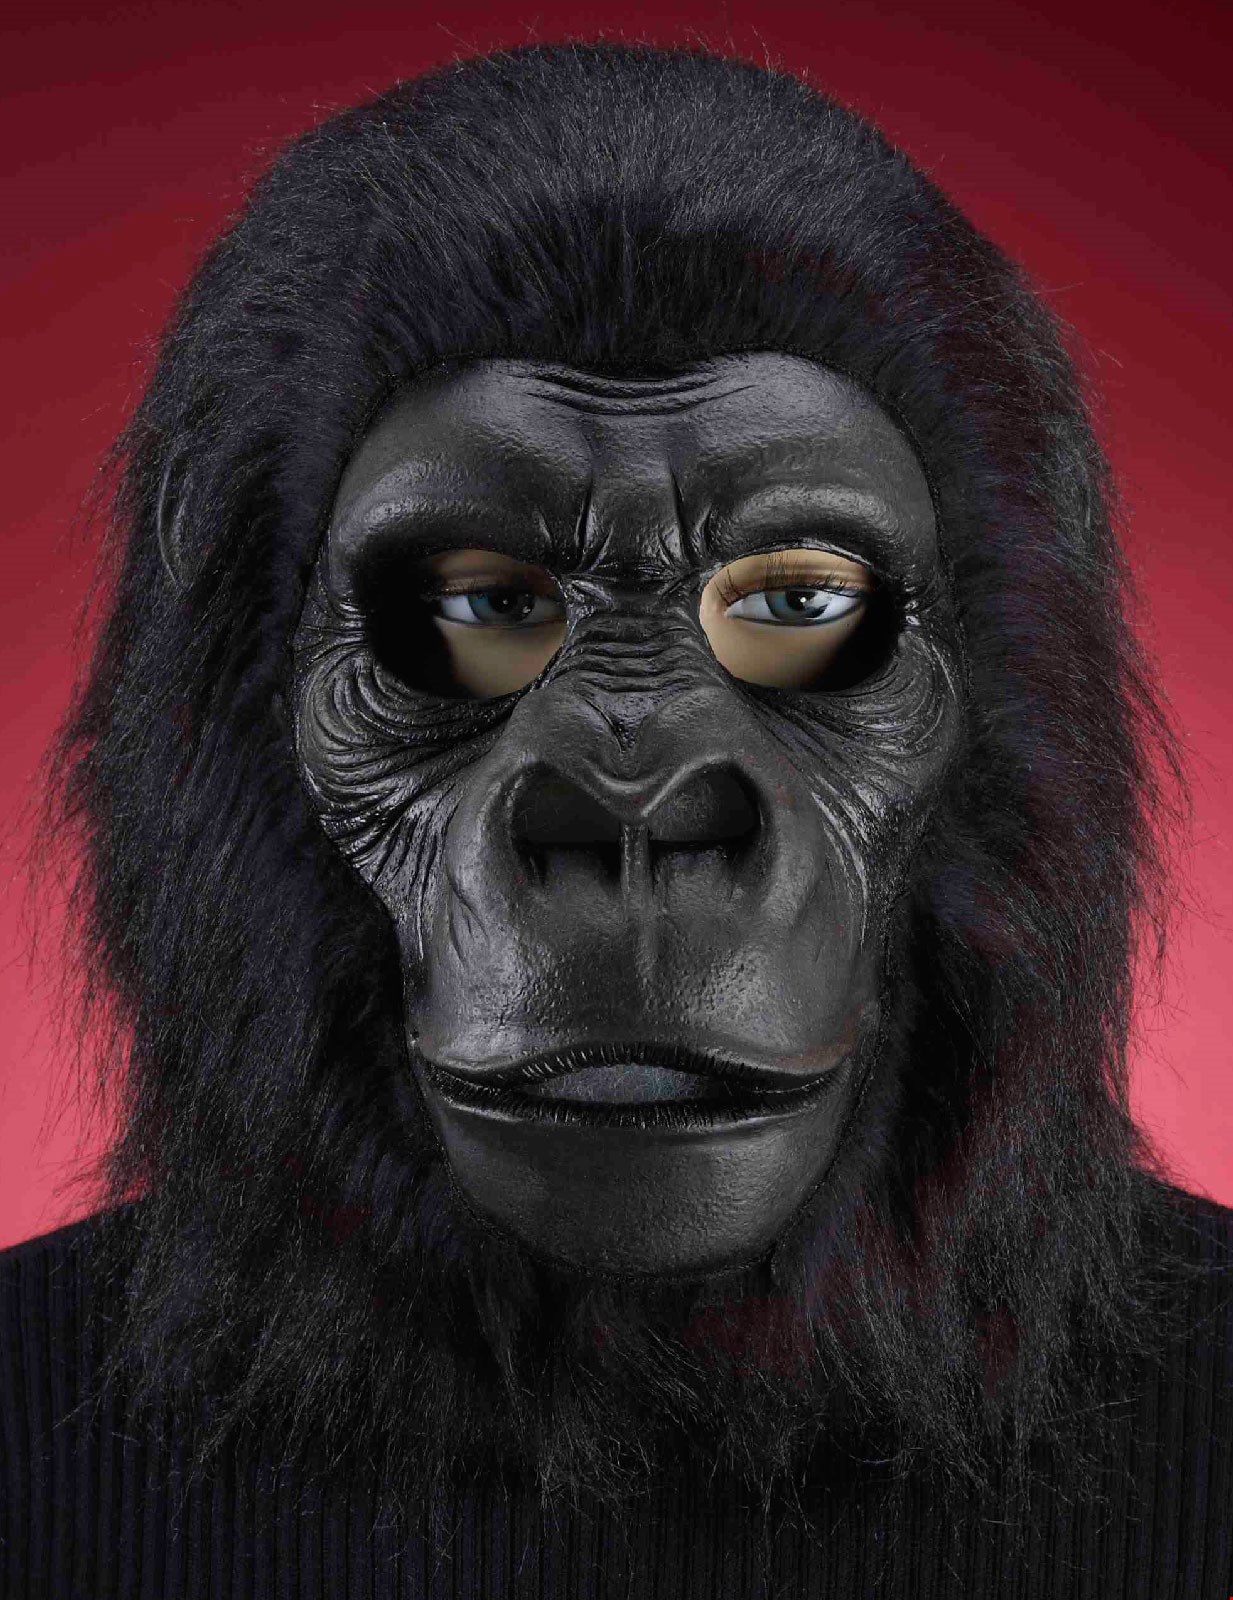 Hairy Black Gorilla Mask | BuyCostumes.com